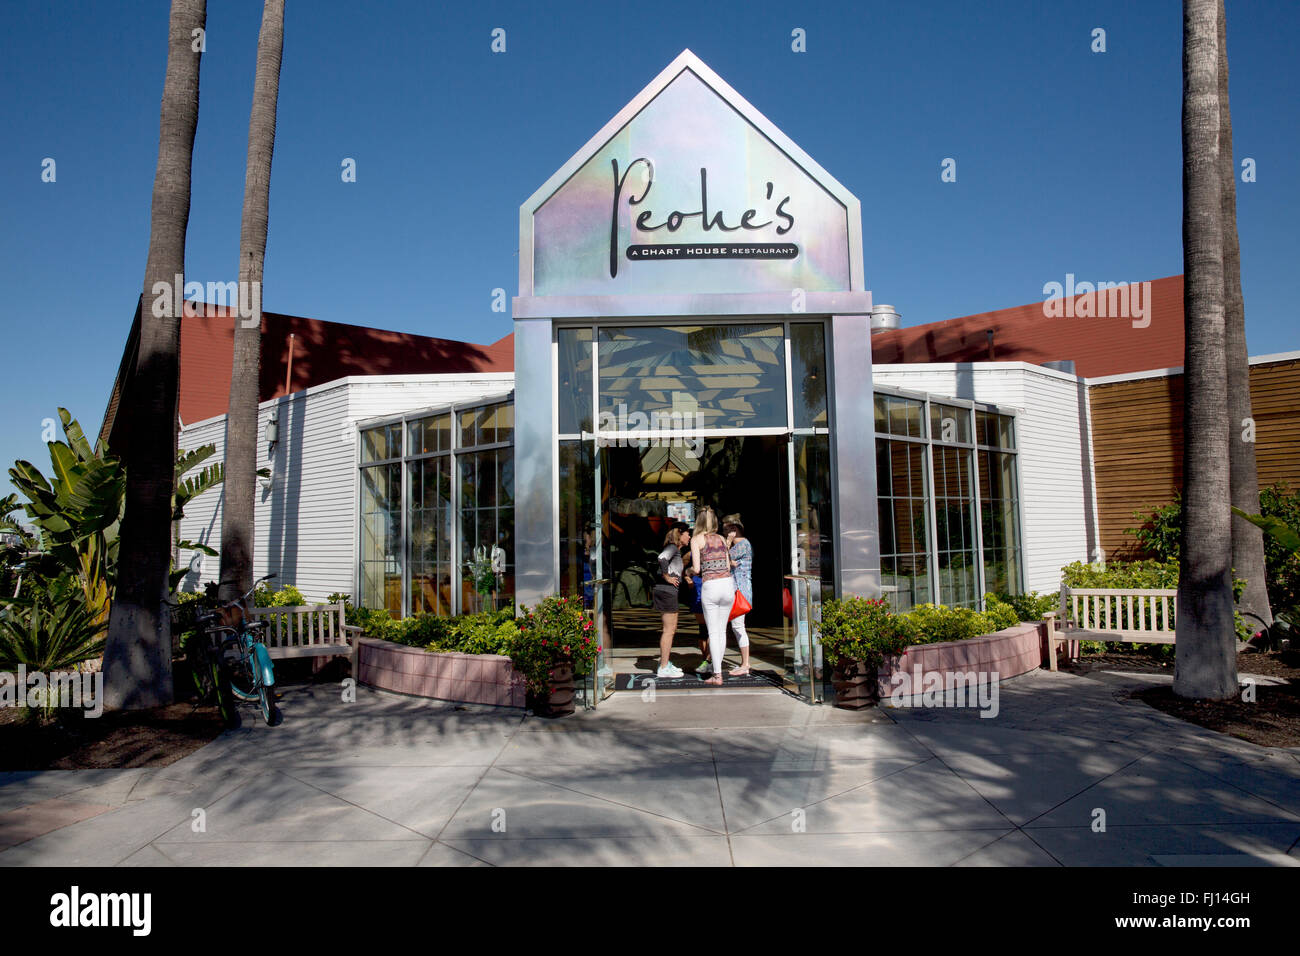 Peohe's Restaurant, Coronado Island, San Diego, California, USA Banque D'Images